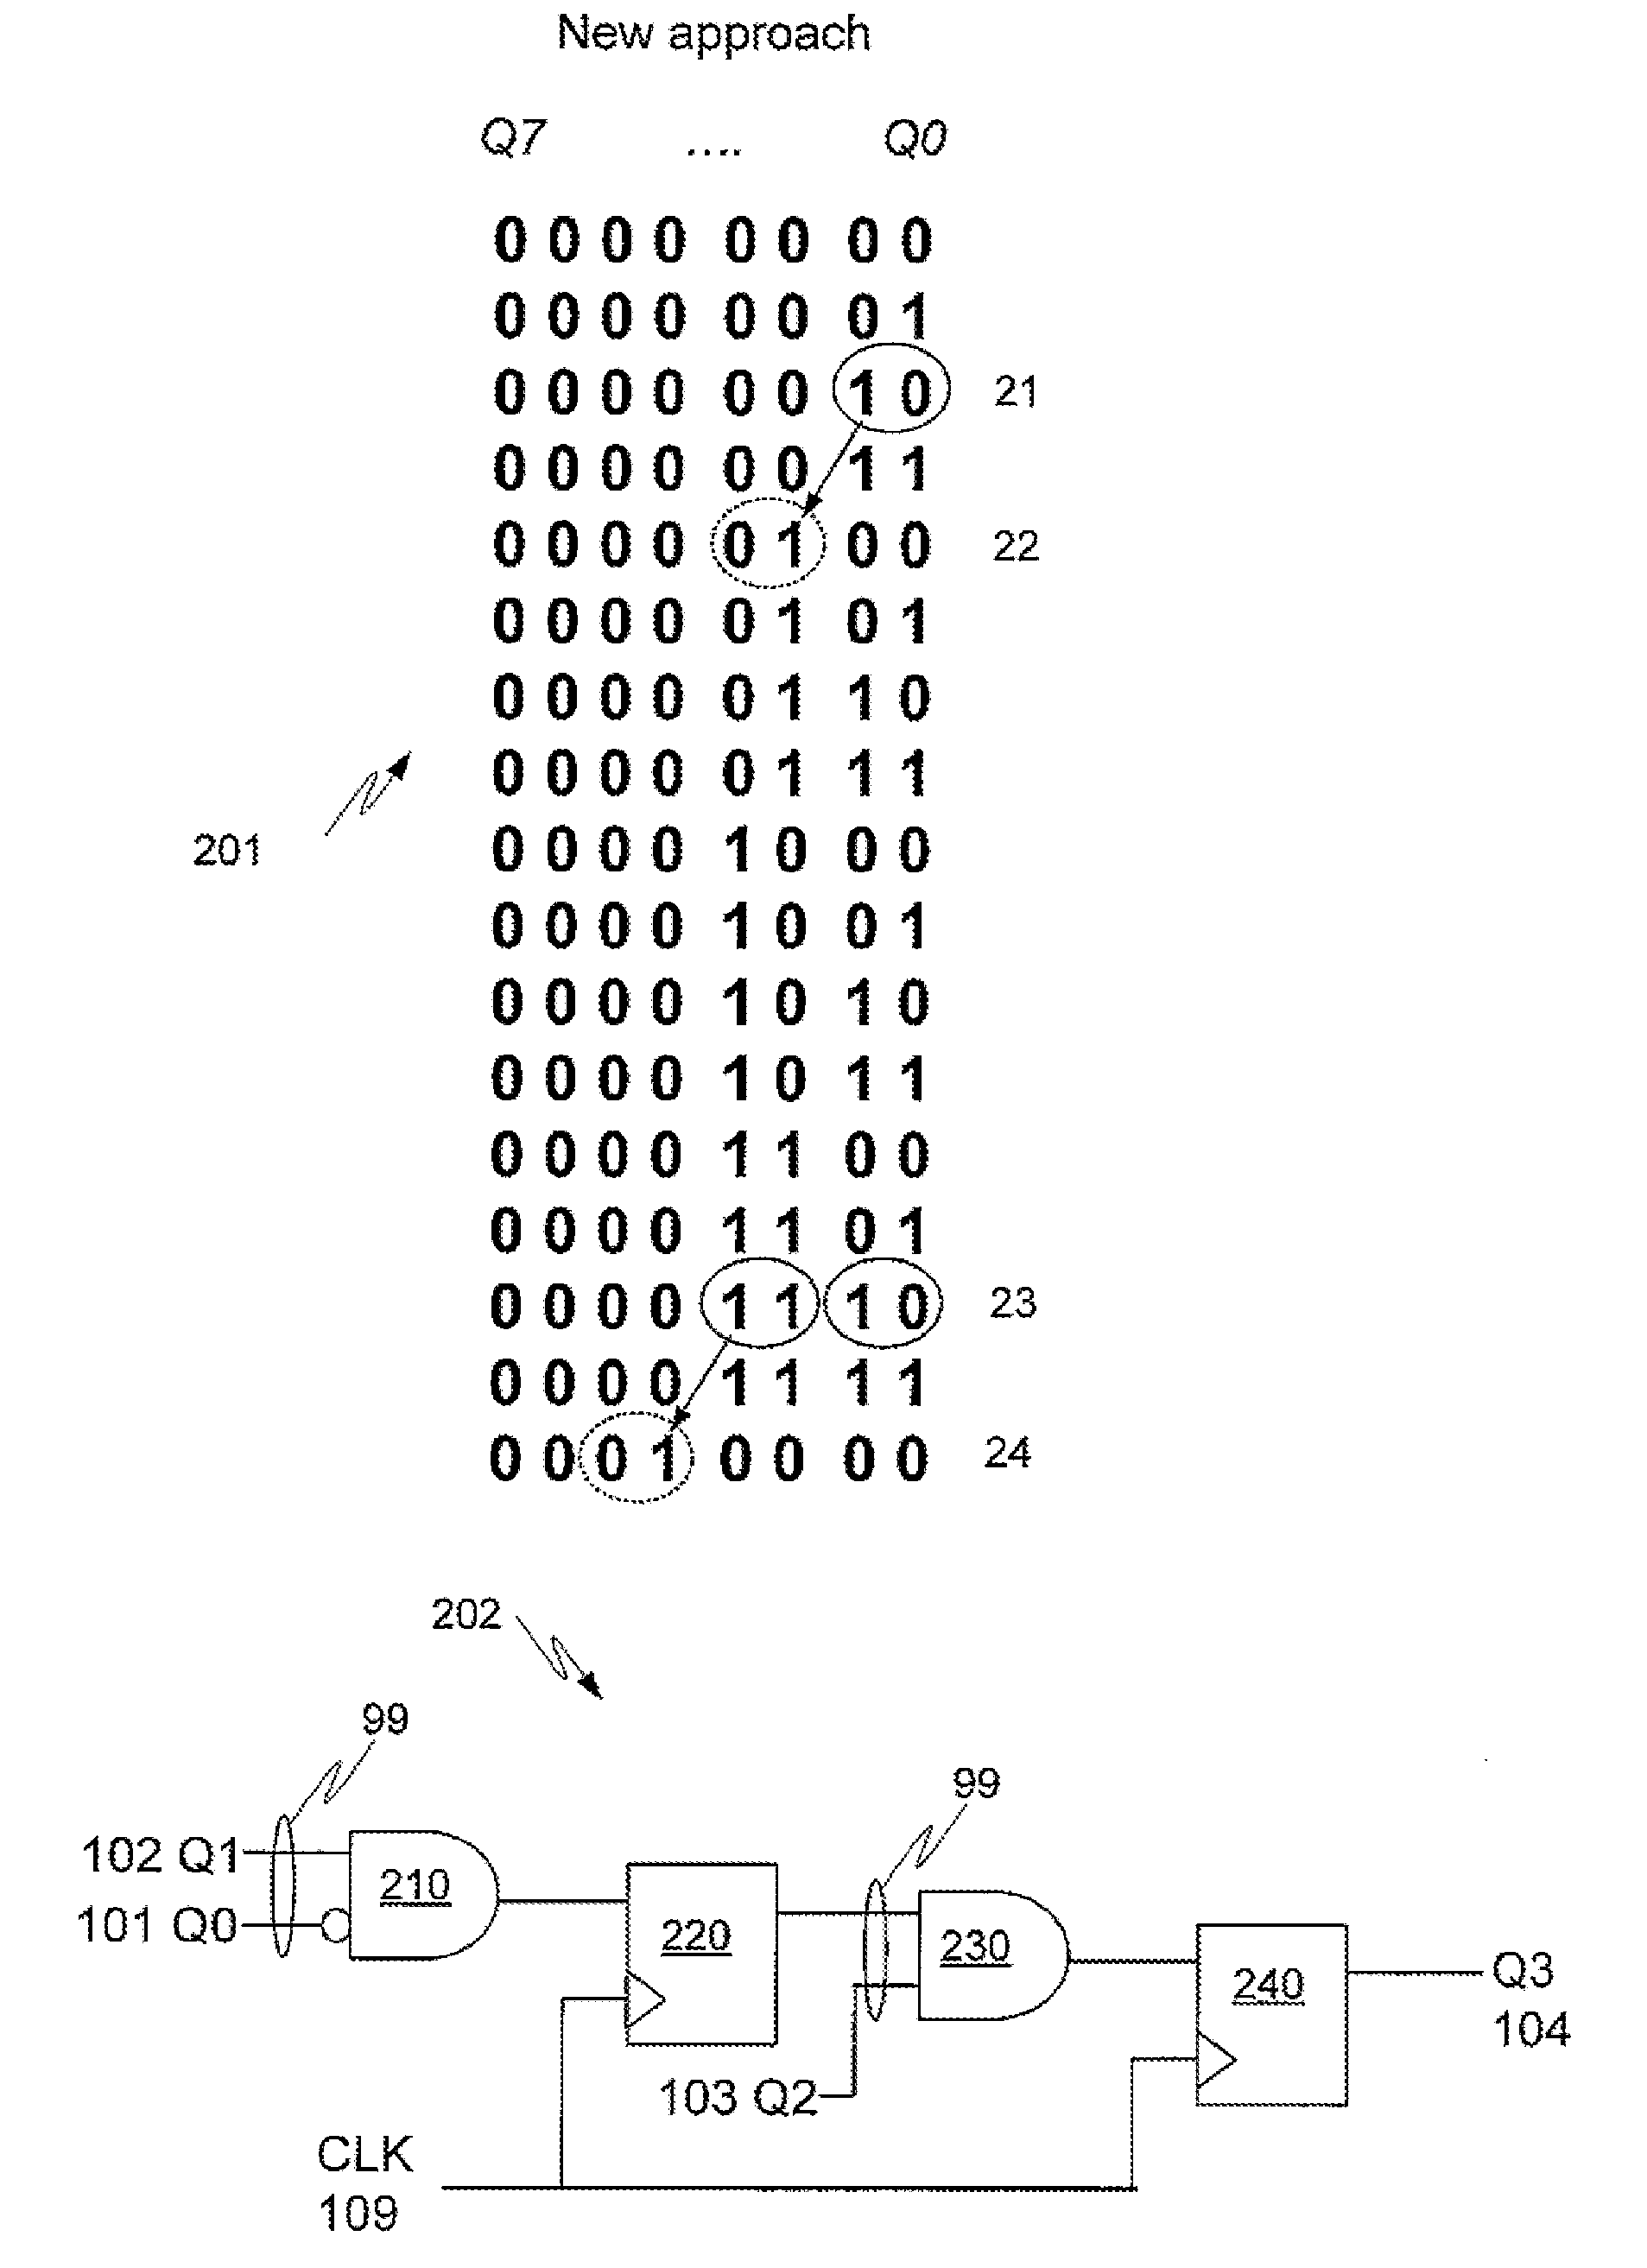 Digital self-gated binary counter